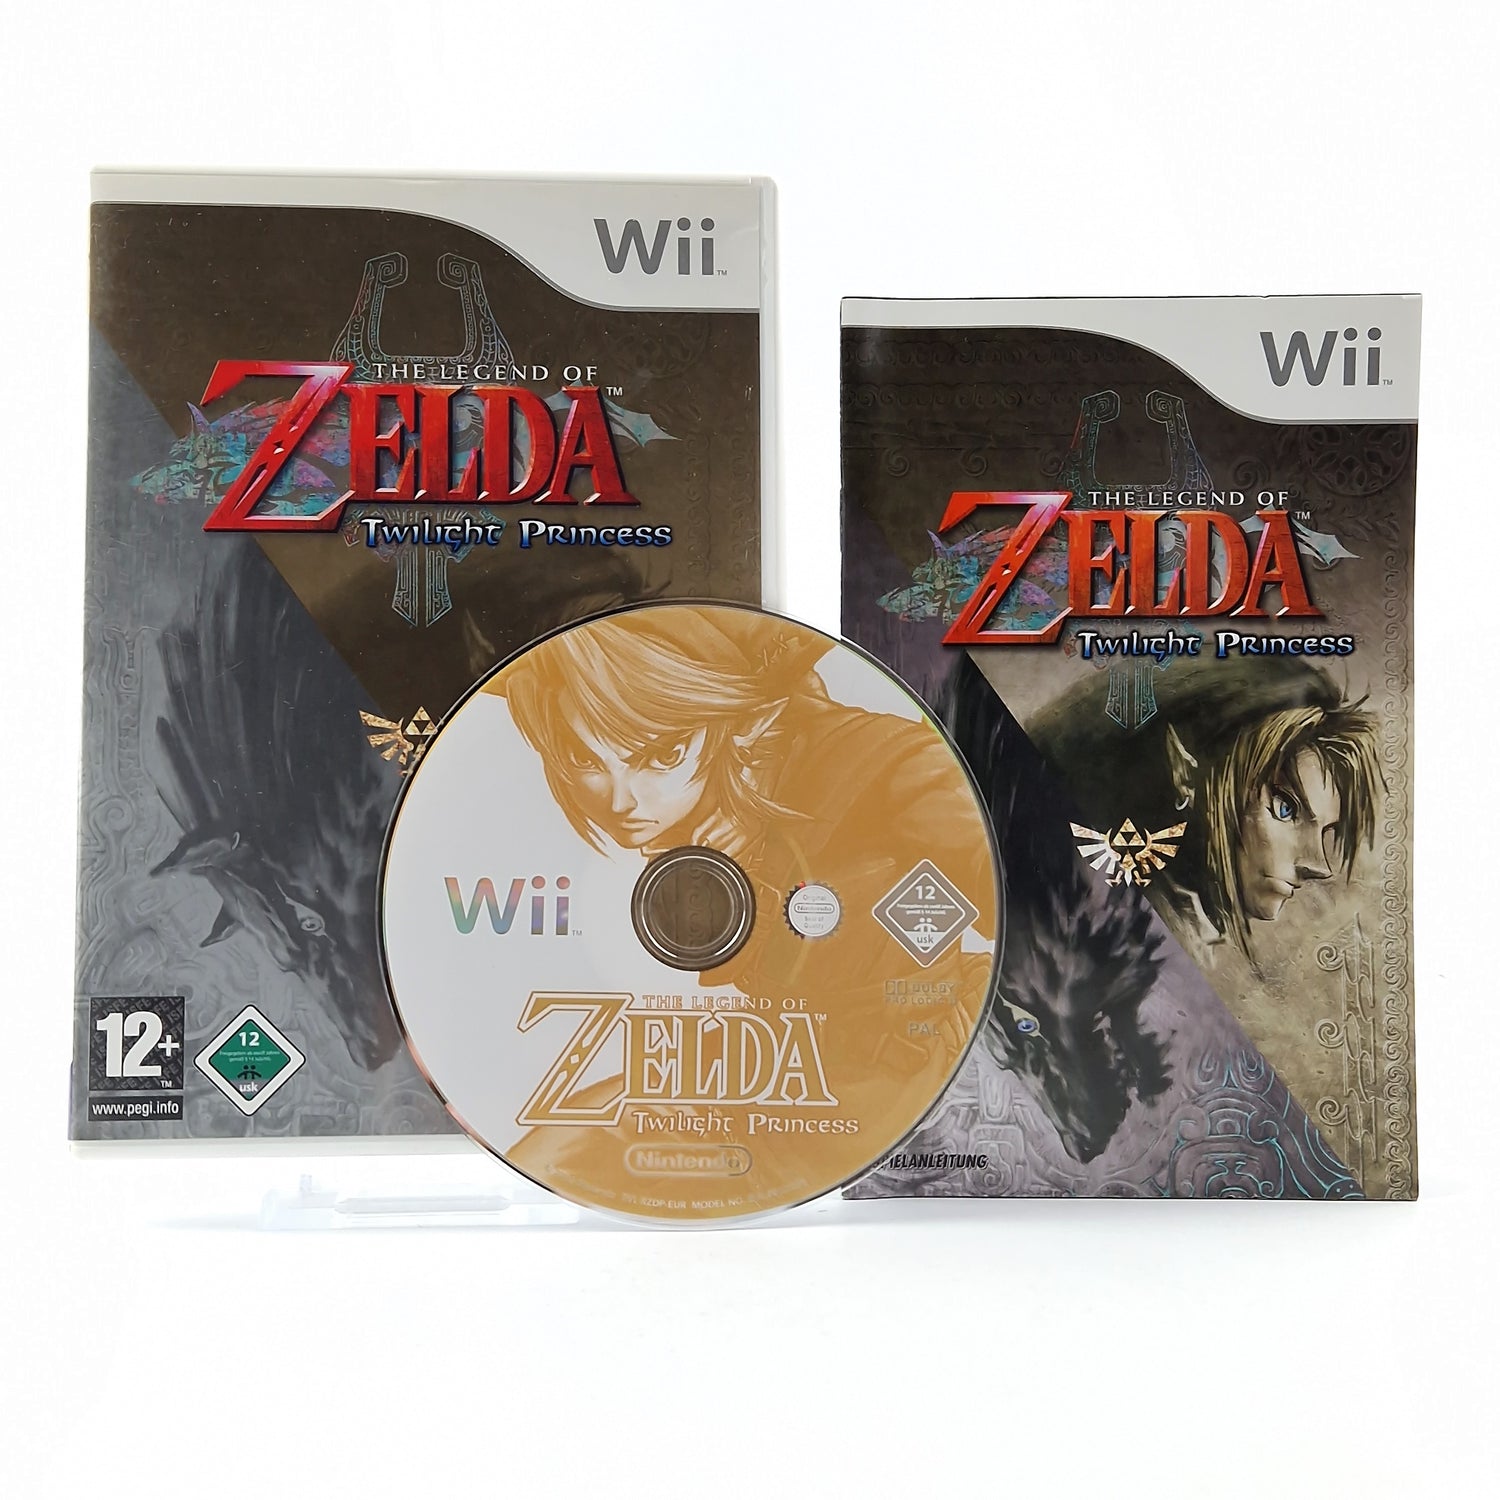 Nintendo Wii game: The Legend of Zelda Twilight Princess - OVP PAL * Very good